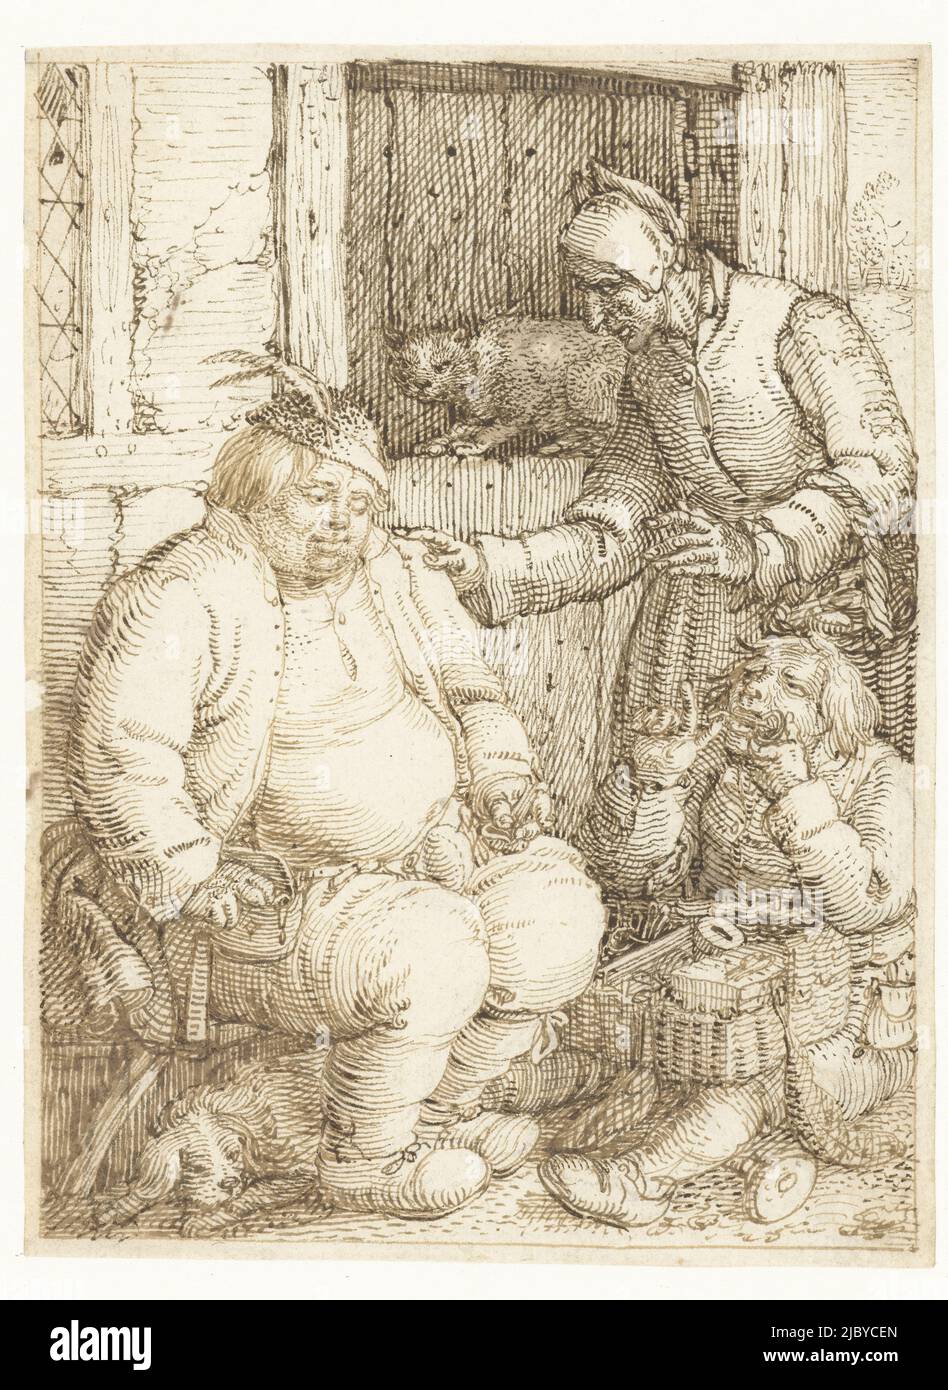 Marcher demonstrating his wares, David Vinckboons (I), c. 1608, Design for a painting., draughtsman: David Vinckboons (I), c. 1608, paper, pen, h 136 mm × w 101 mm Stock Photo